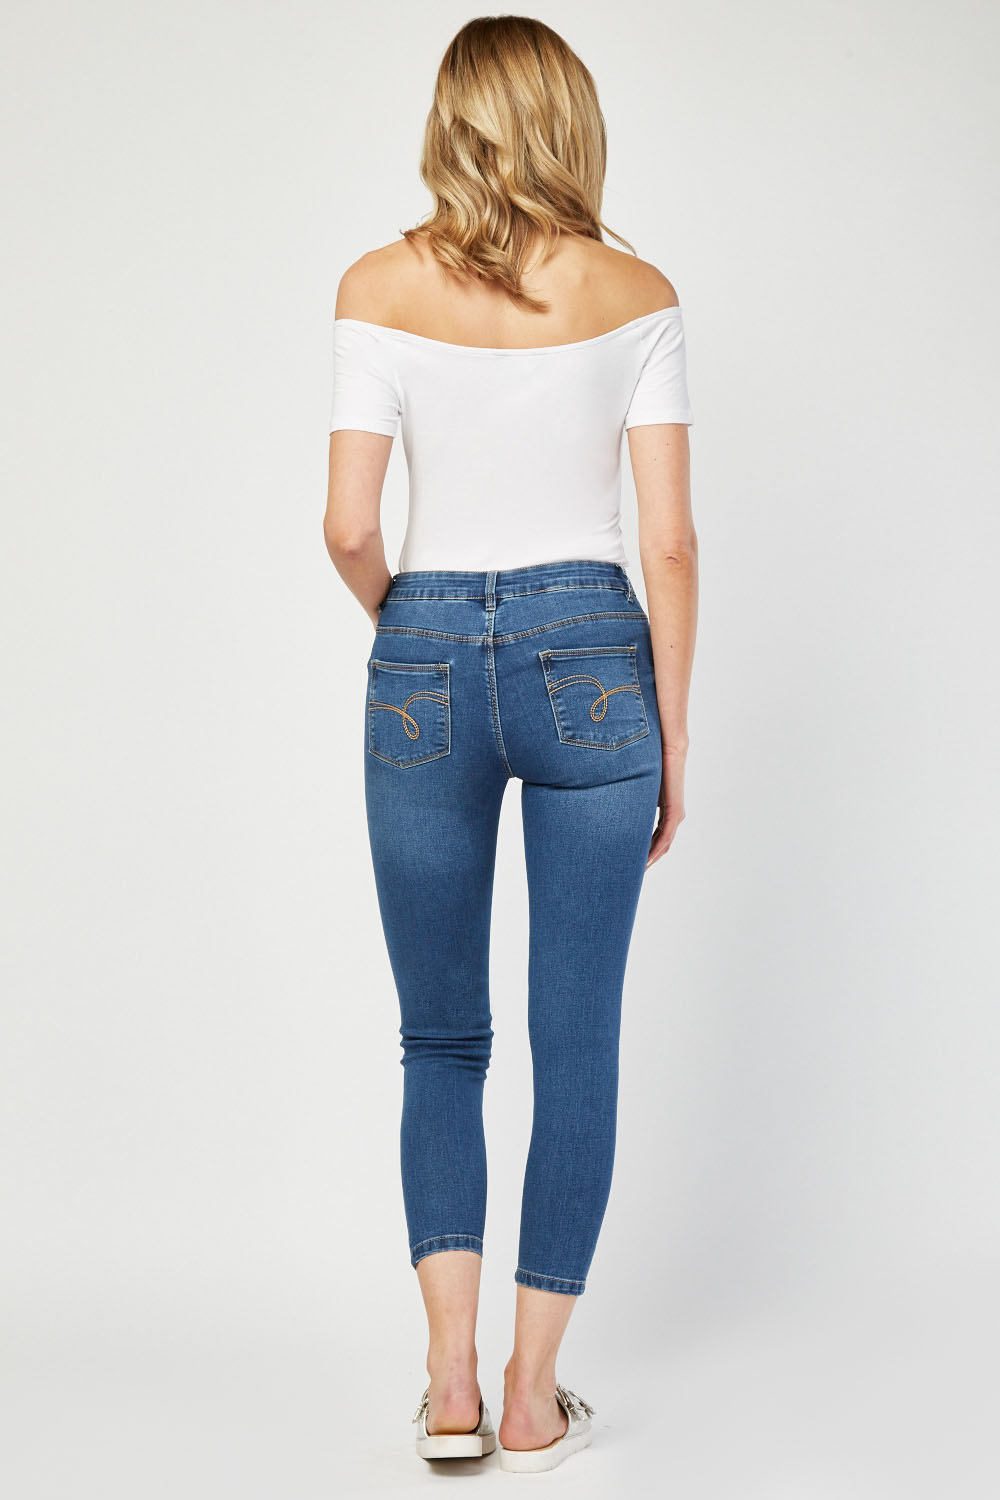 Skinny Ankle Grazer Jeans - Just £5